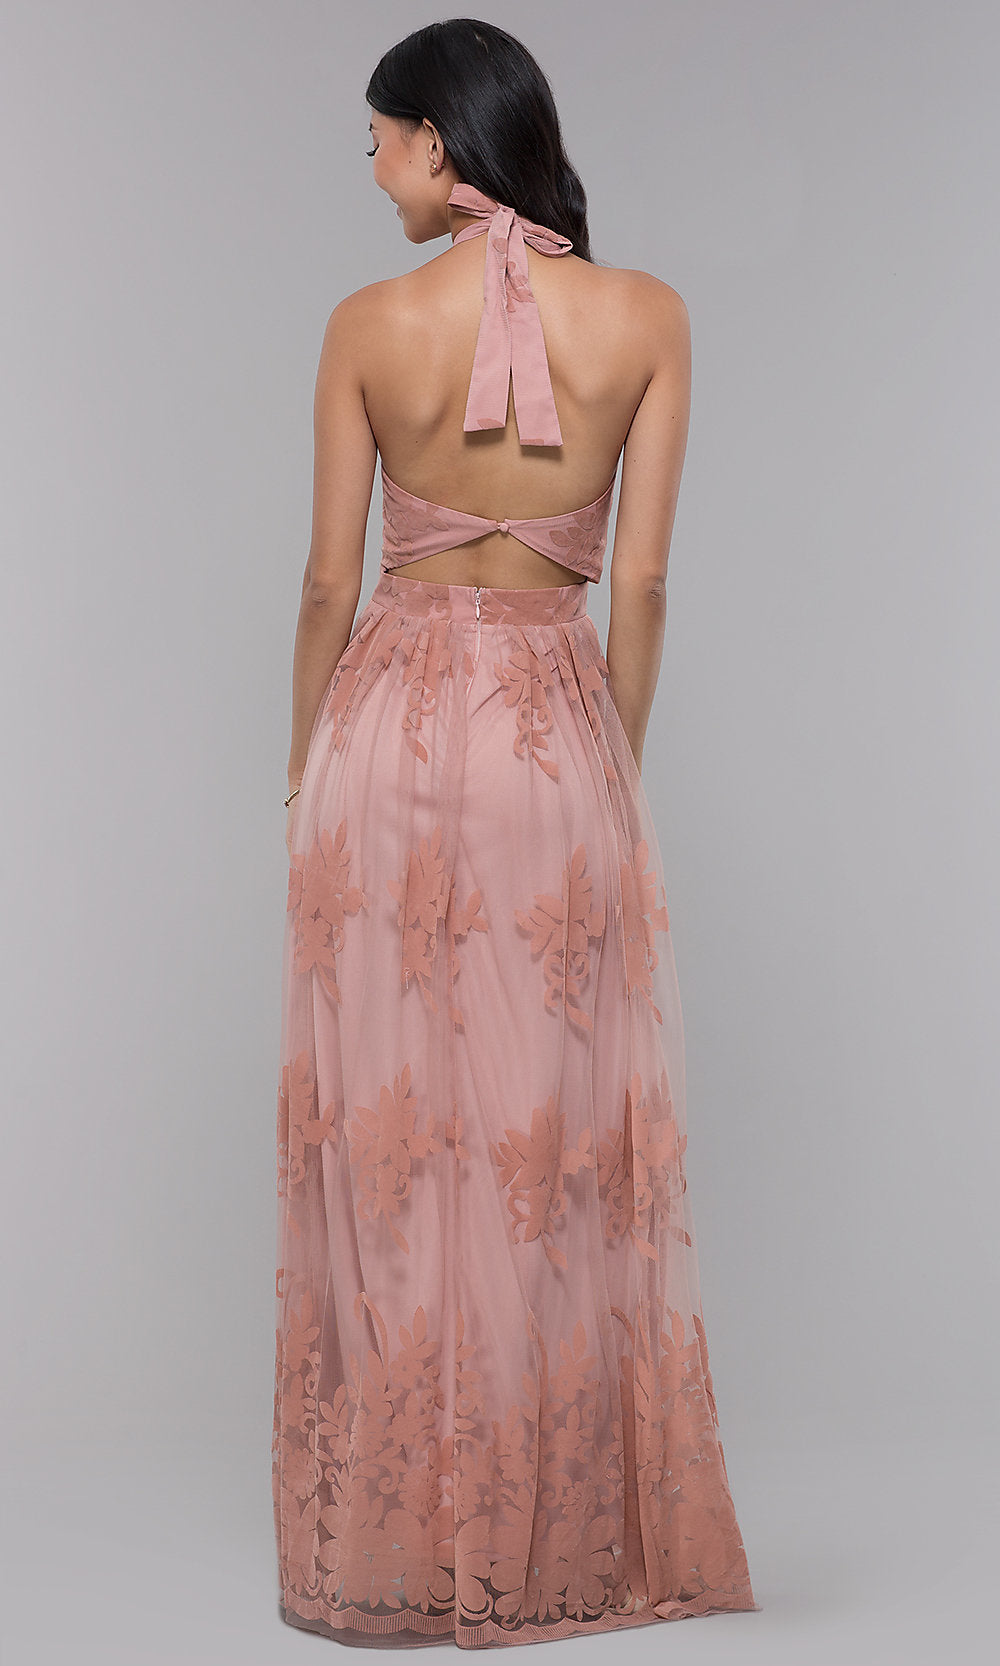 High-Neck Long Halter Formal Dress in Blush Pink